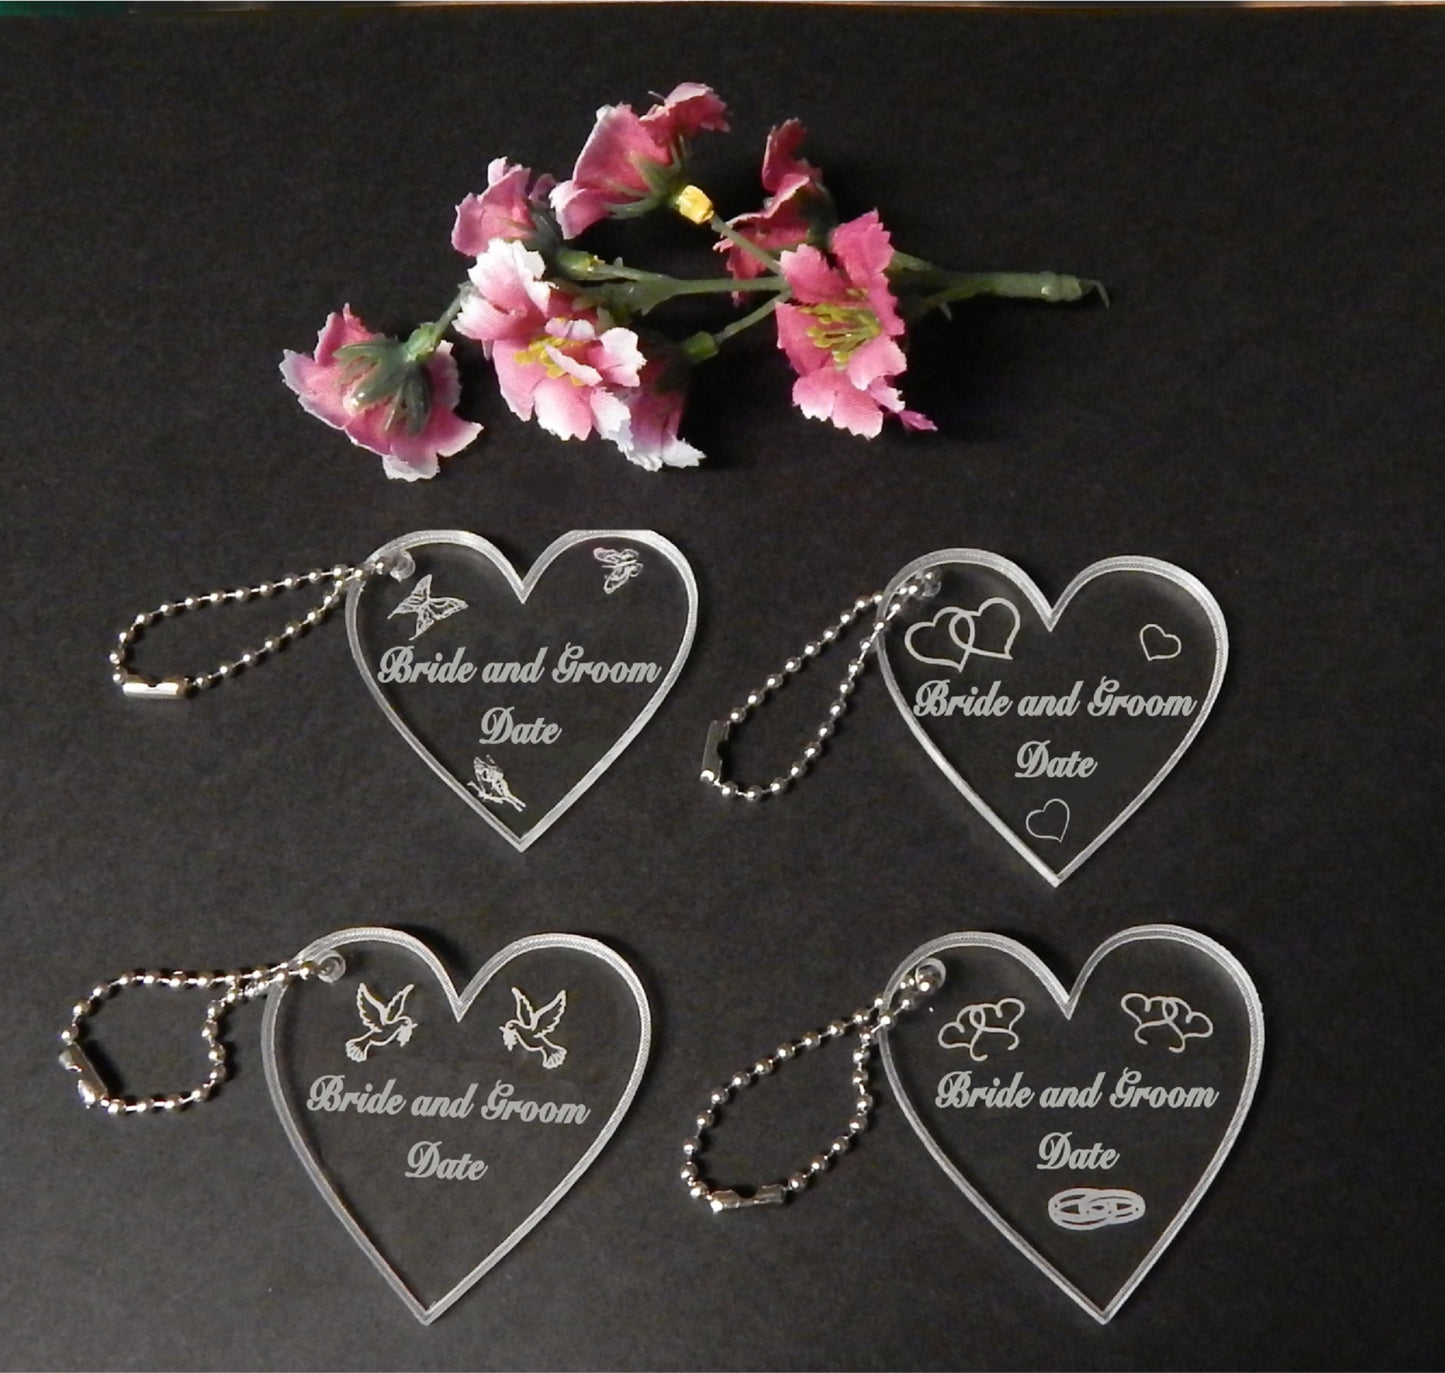 QTY 100 Personalized Heart Wedding or Bridal Key Chain Favors custom engraved acrylic keychains